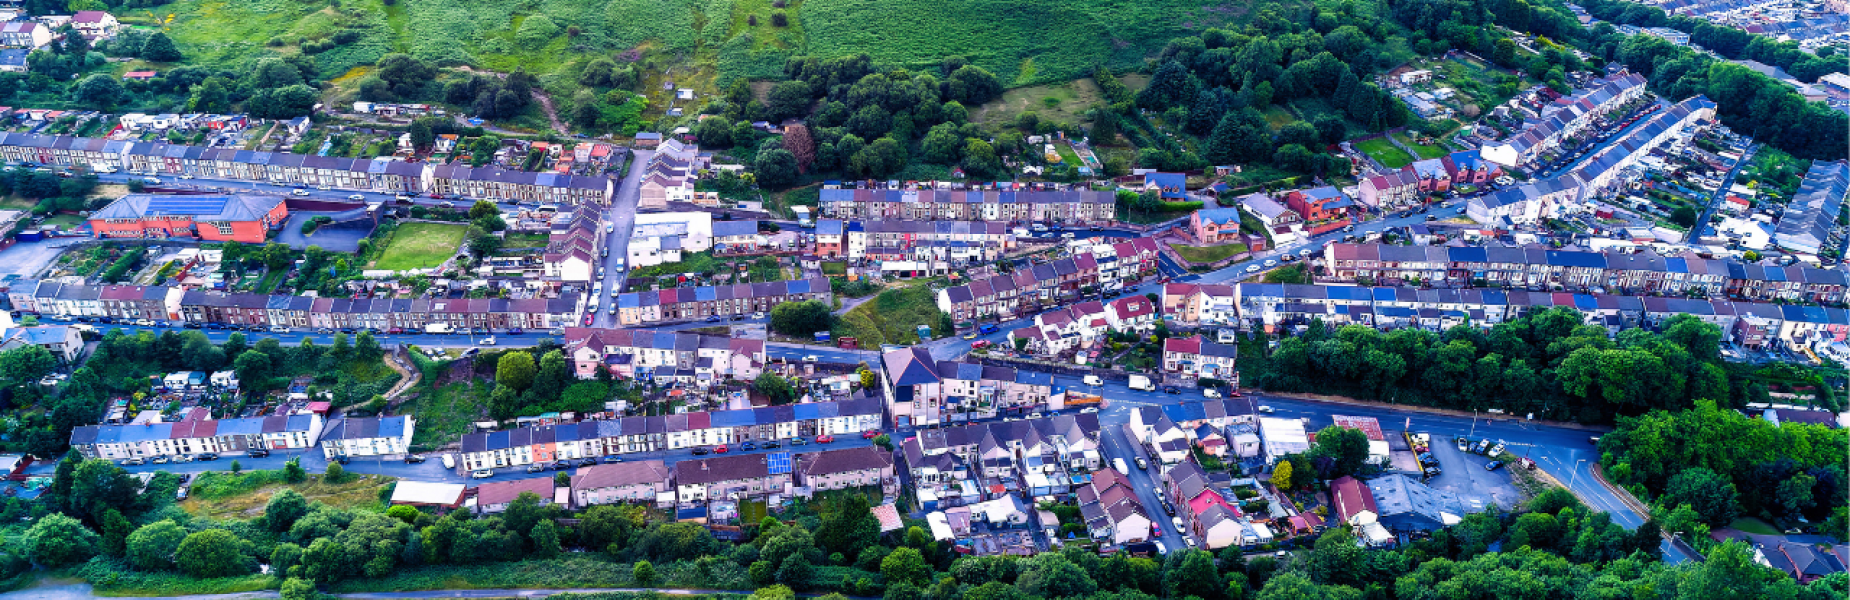 Rhondda Valley aerial view